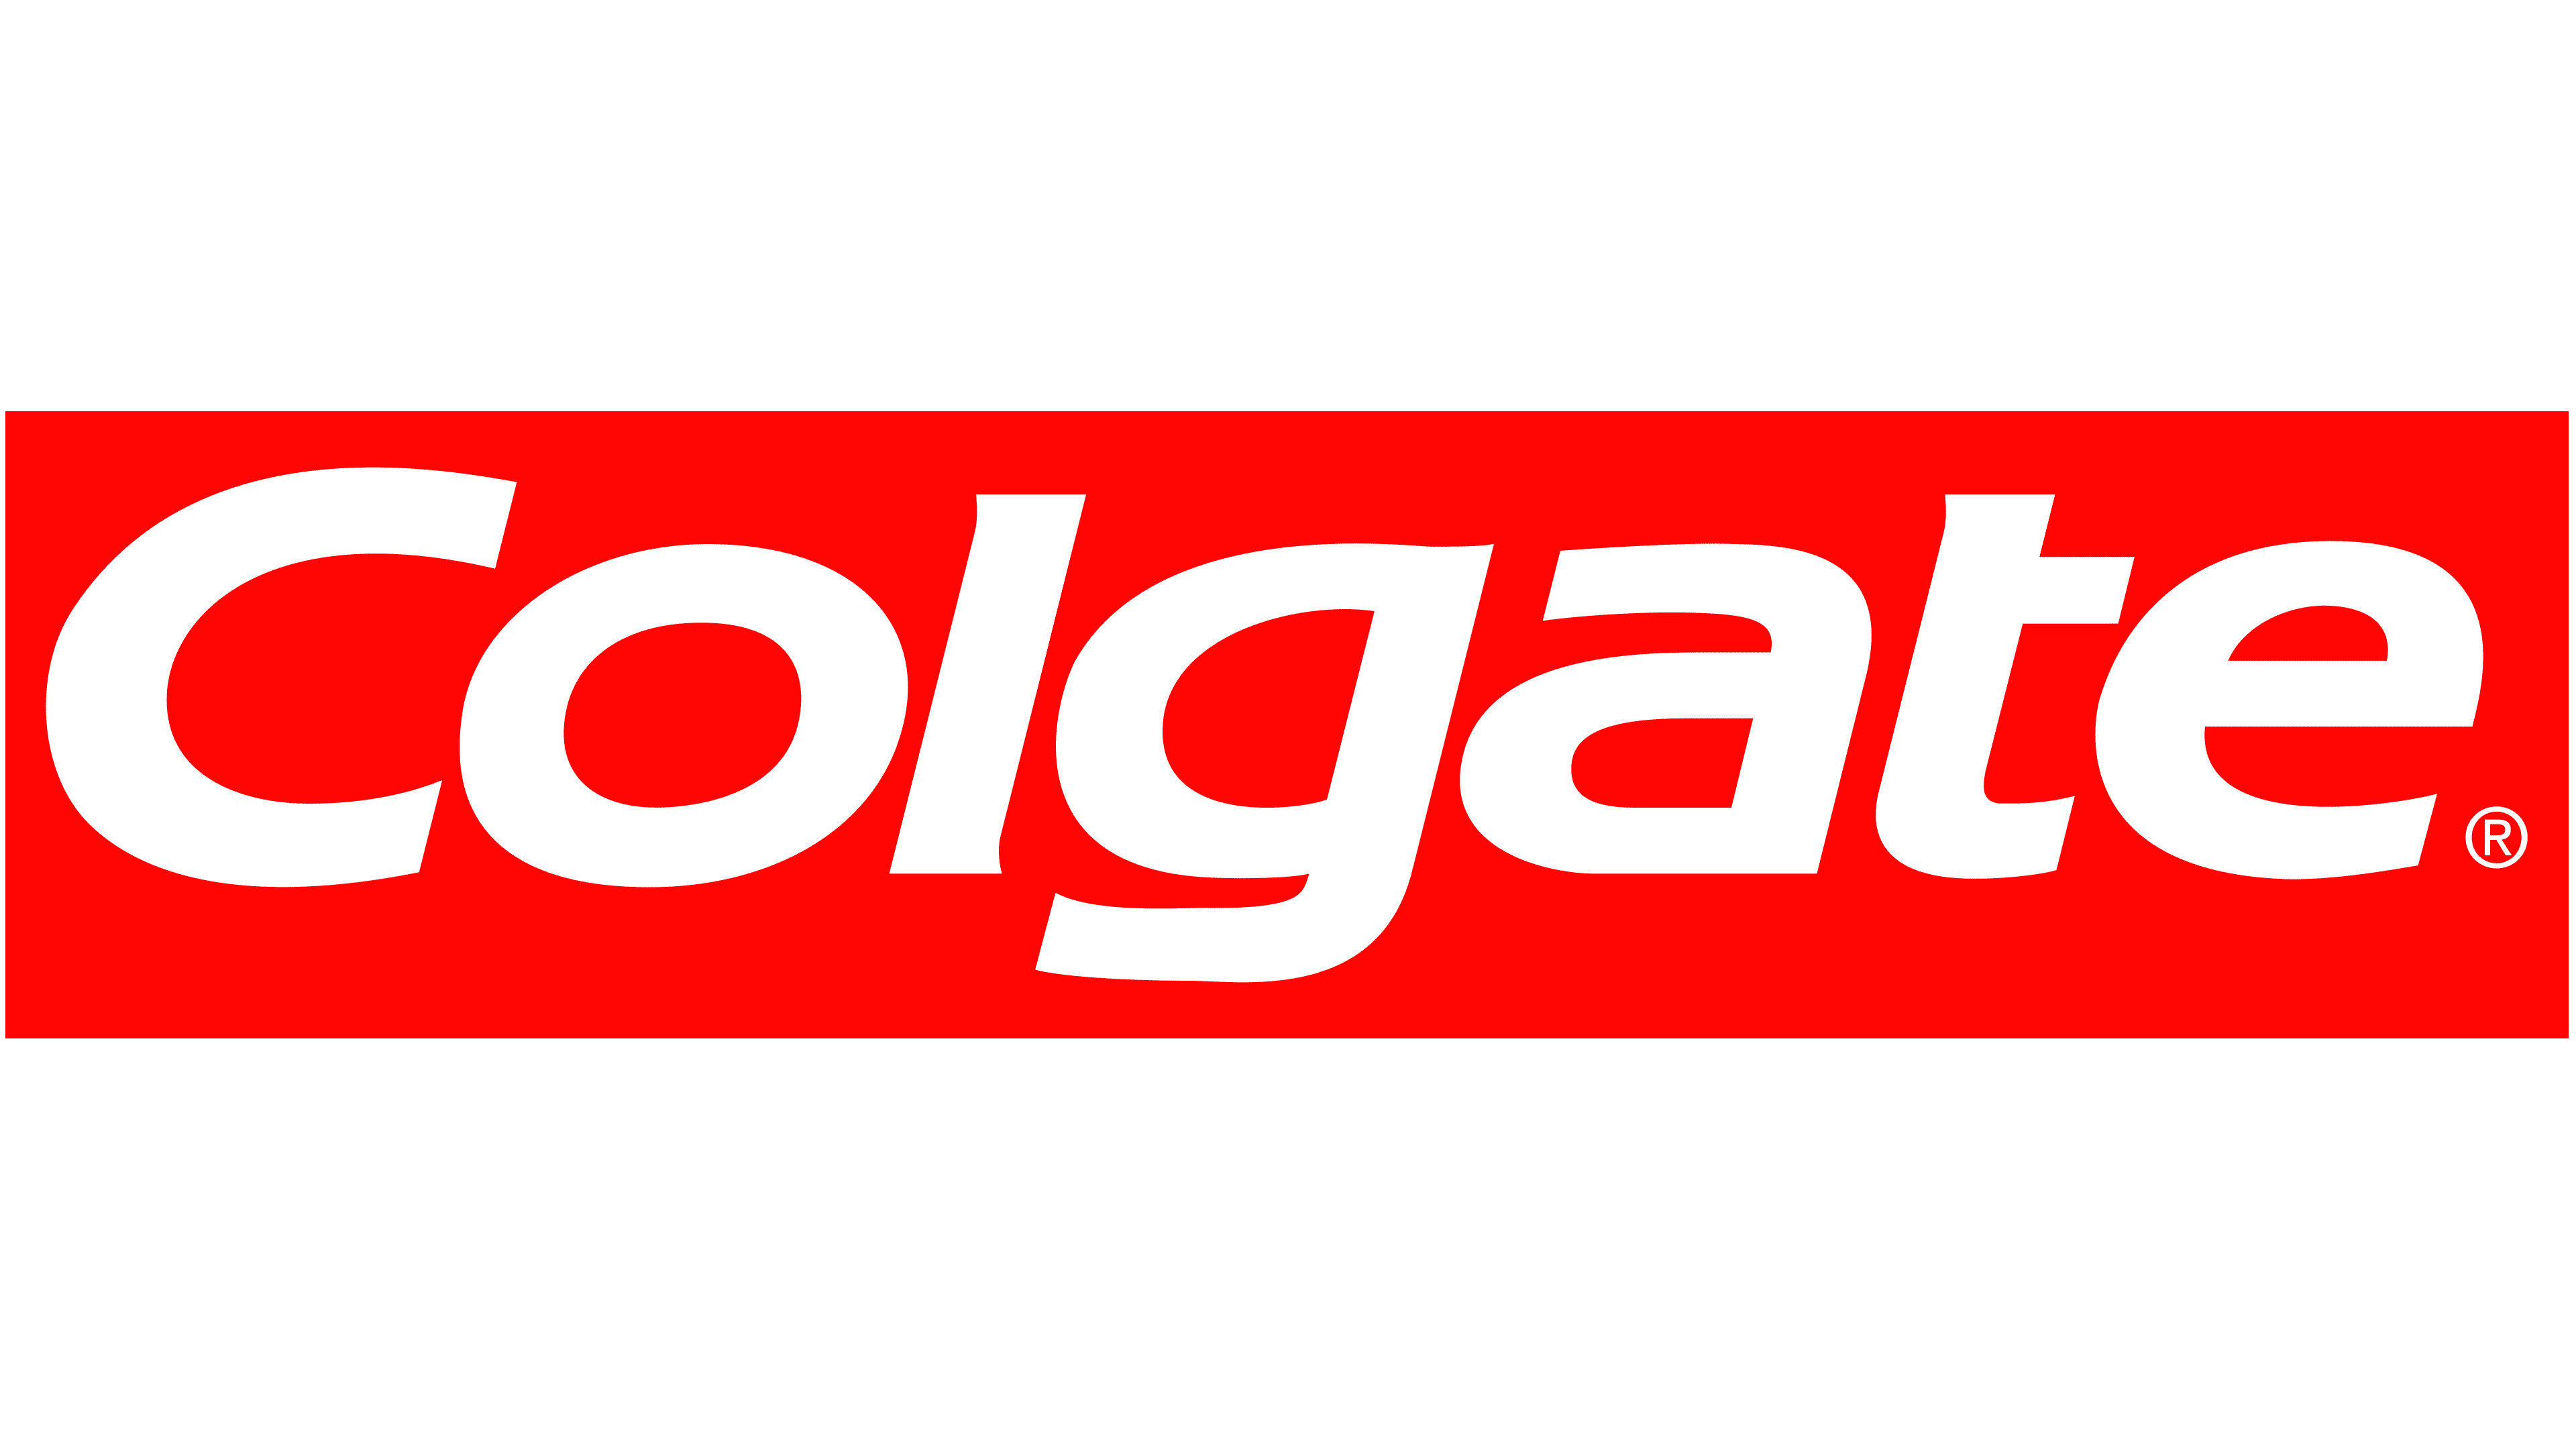 Colgate-Logo-1980